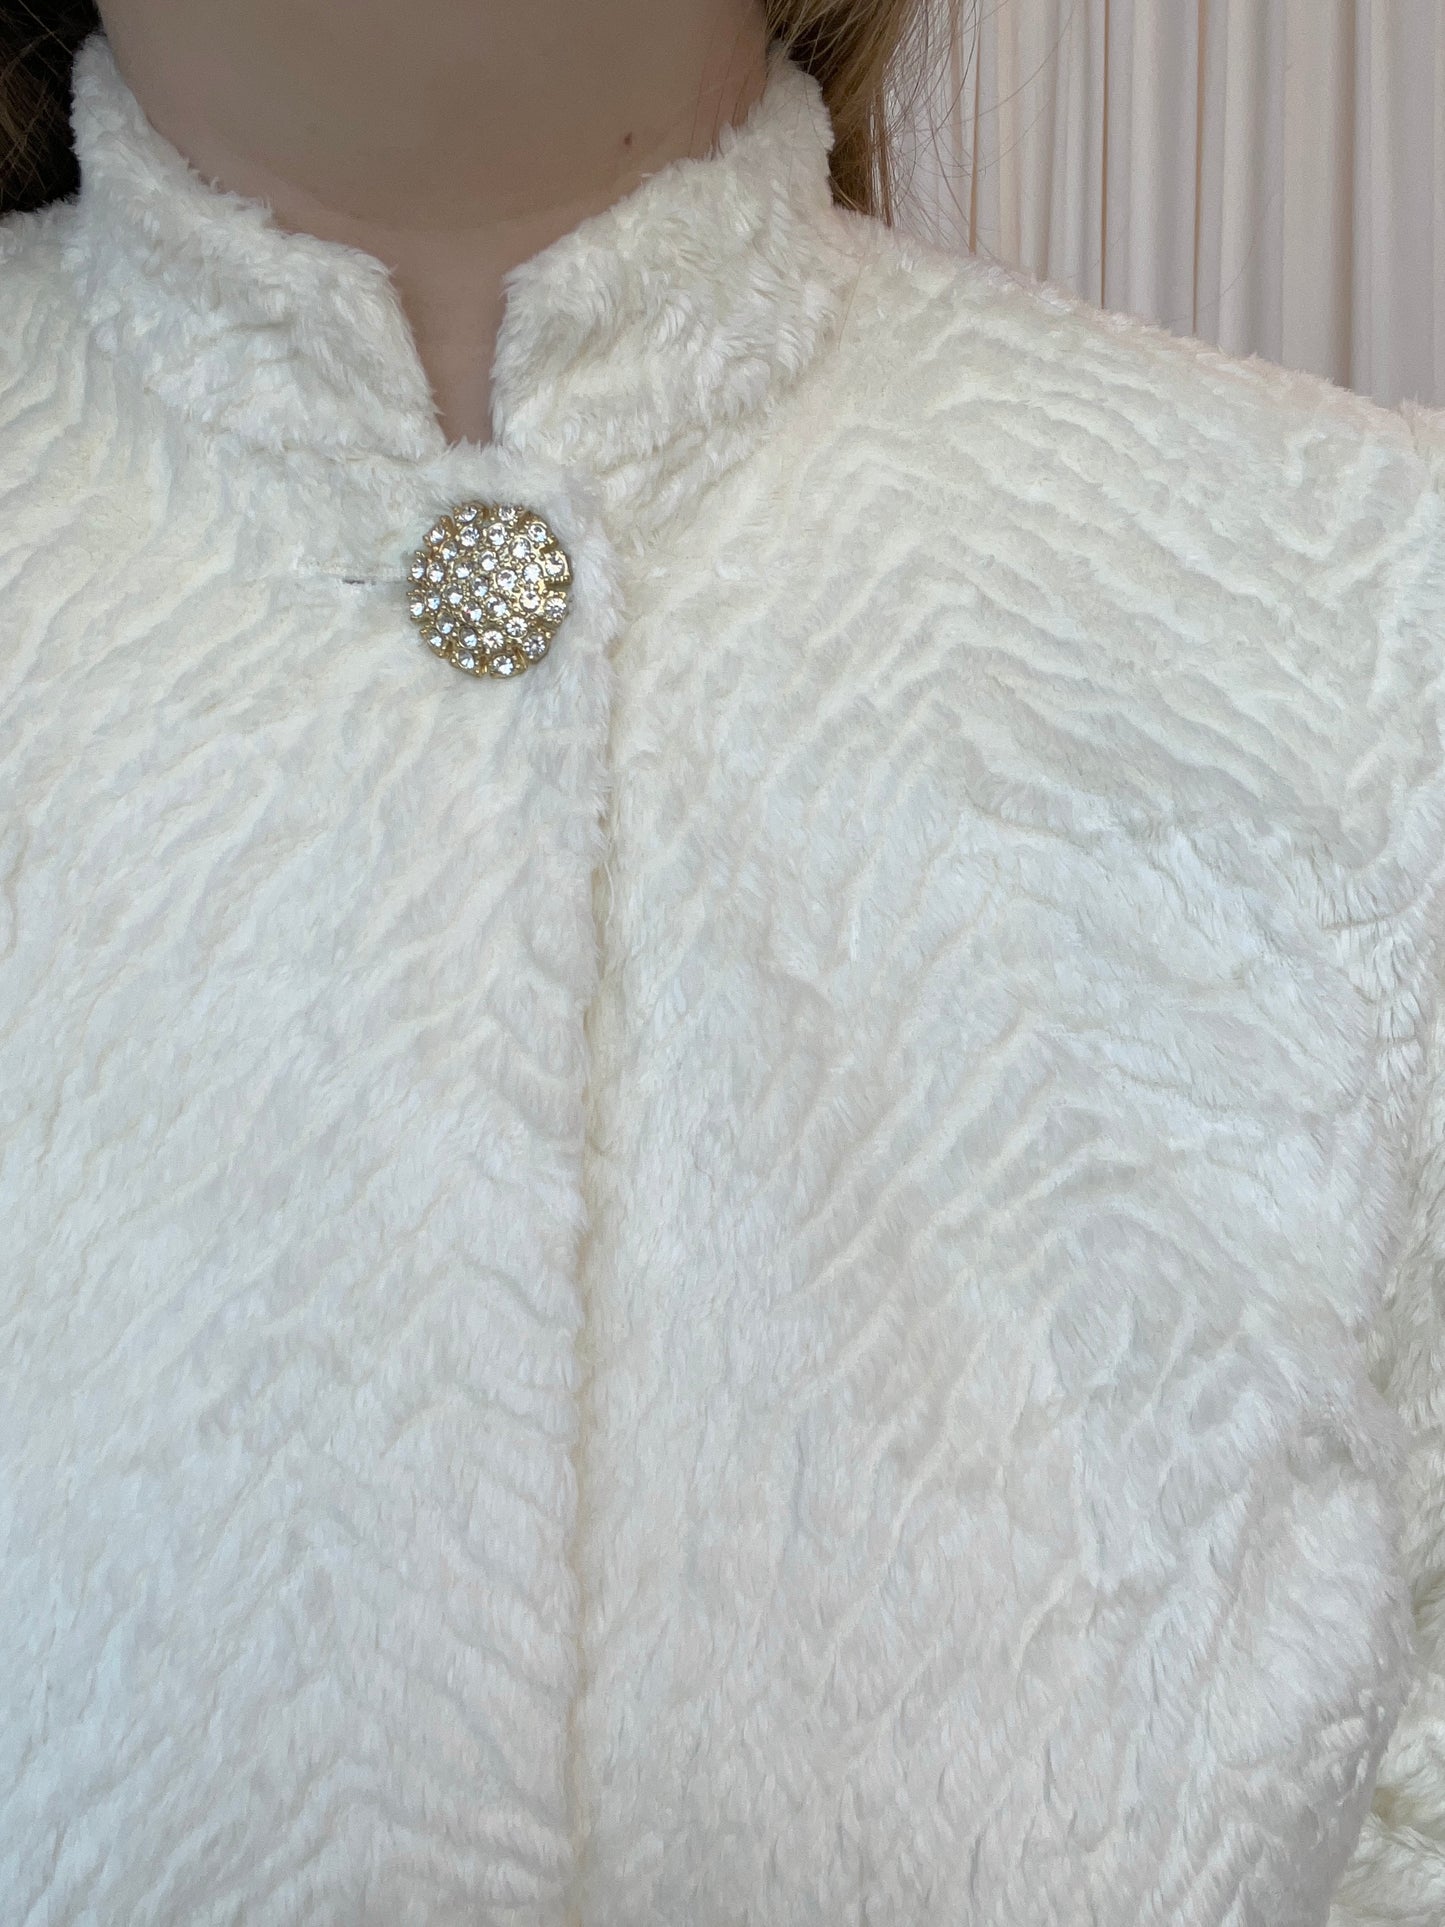 Vintage White Fur Jacket - Small